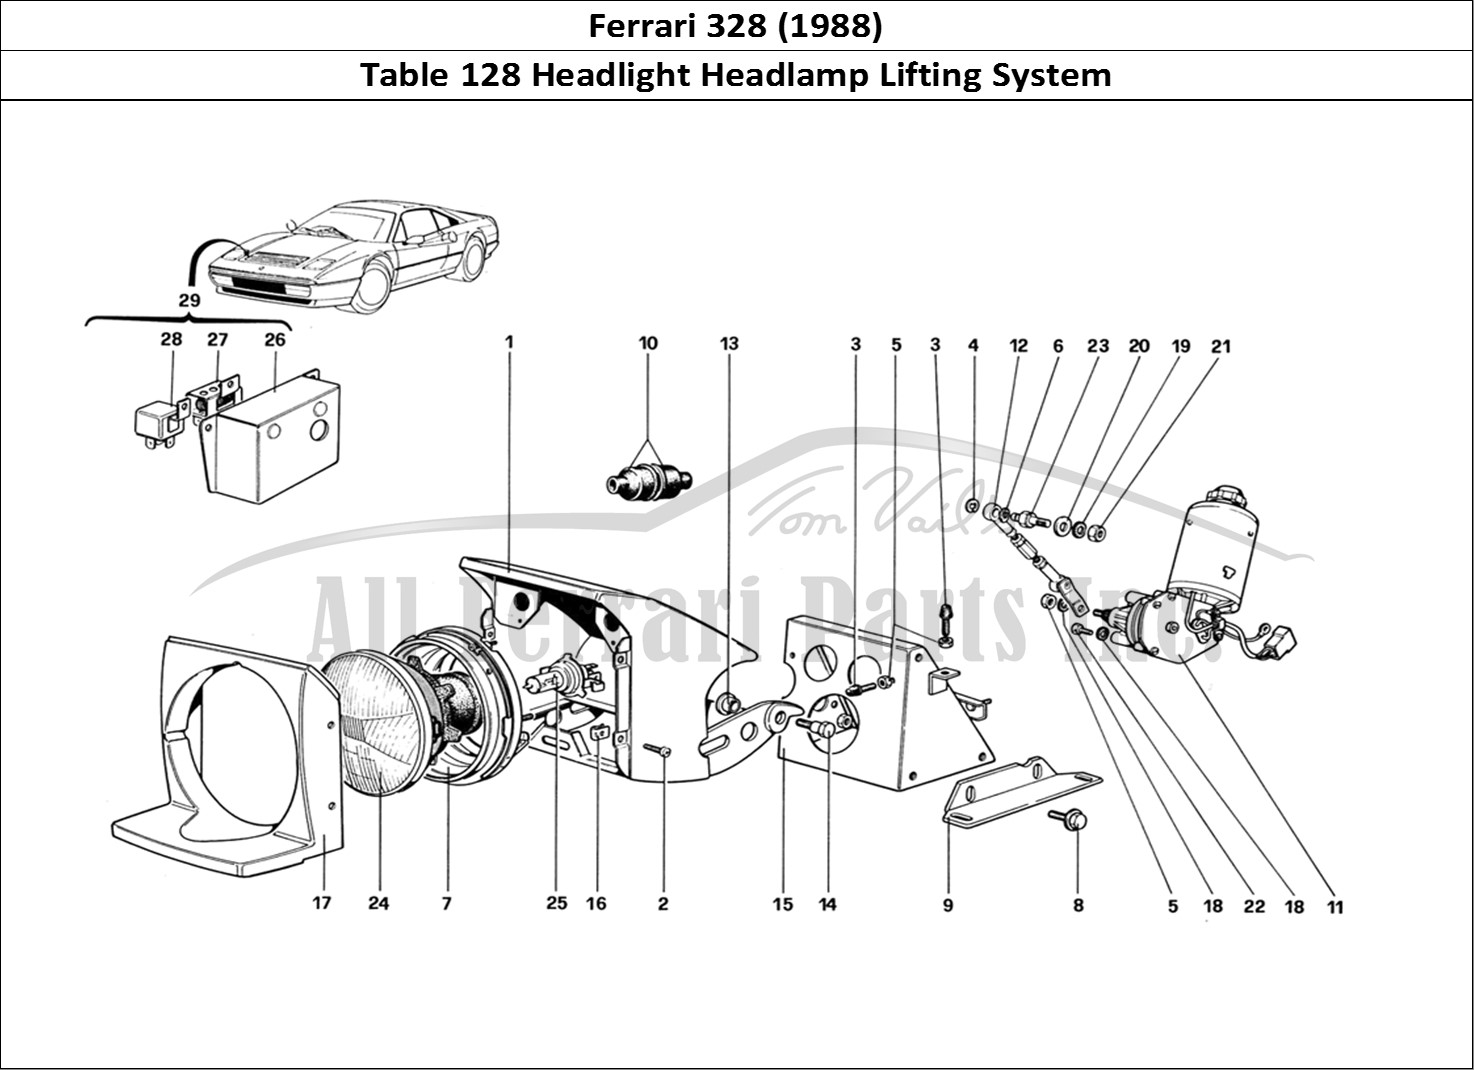 Ferrari Parts Ferrari 328 (1988) Page 128 Lights Lifting Device and